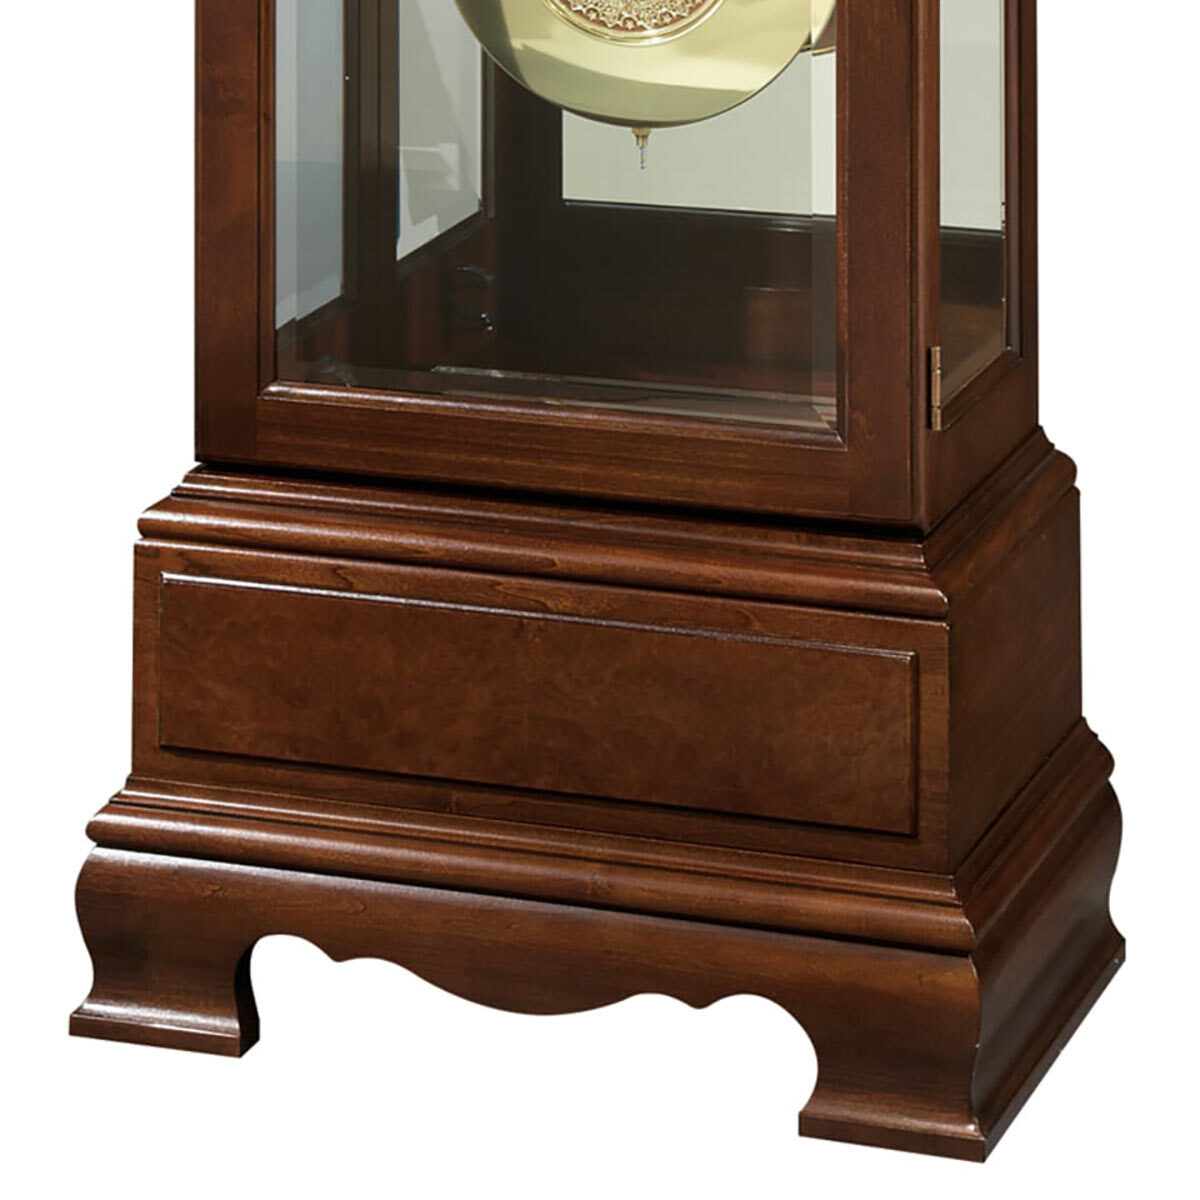 Howard Miller 79" (201 cm)  Jasper Grandfather Clock